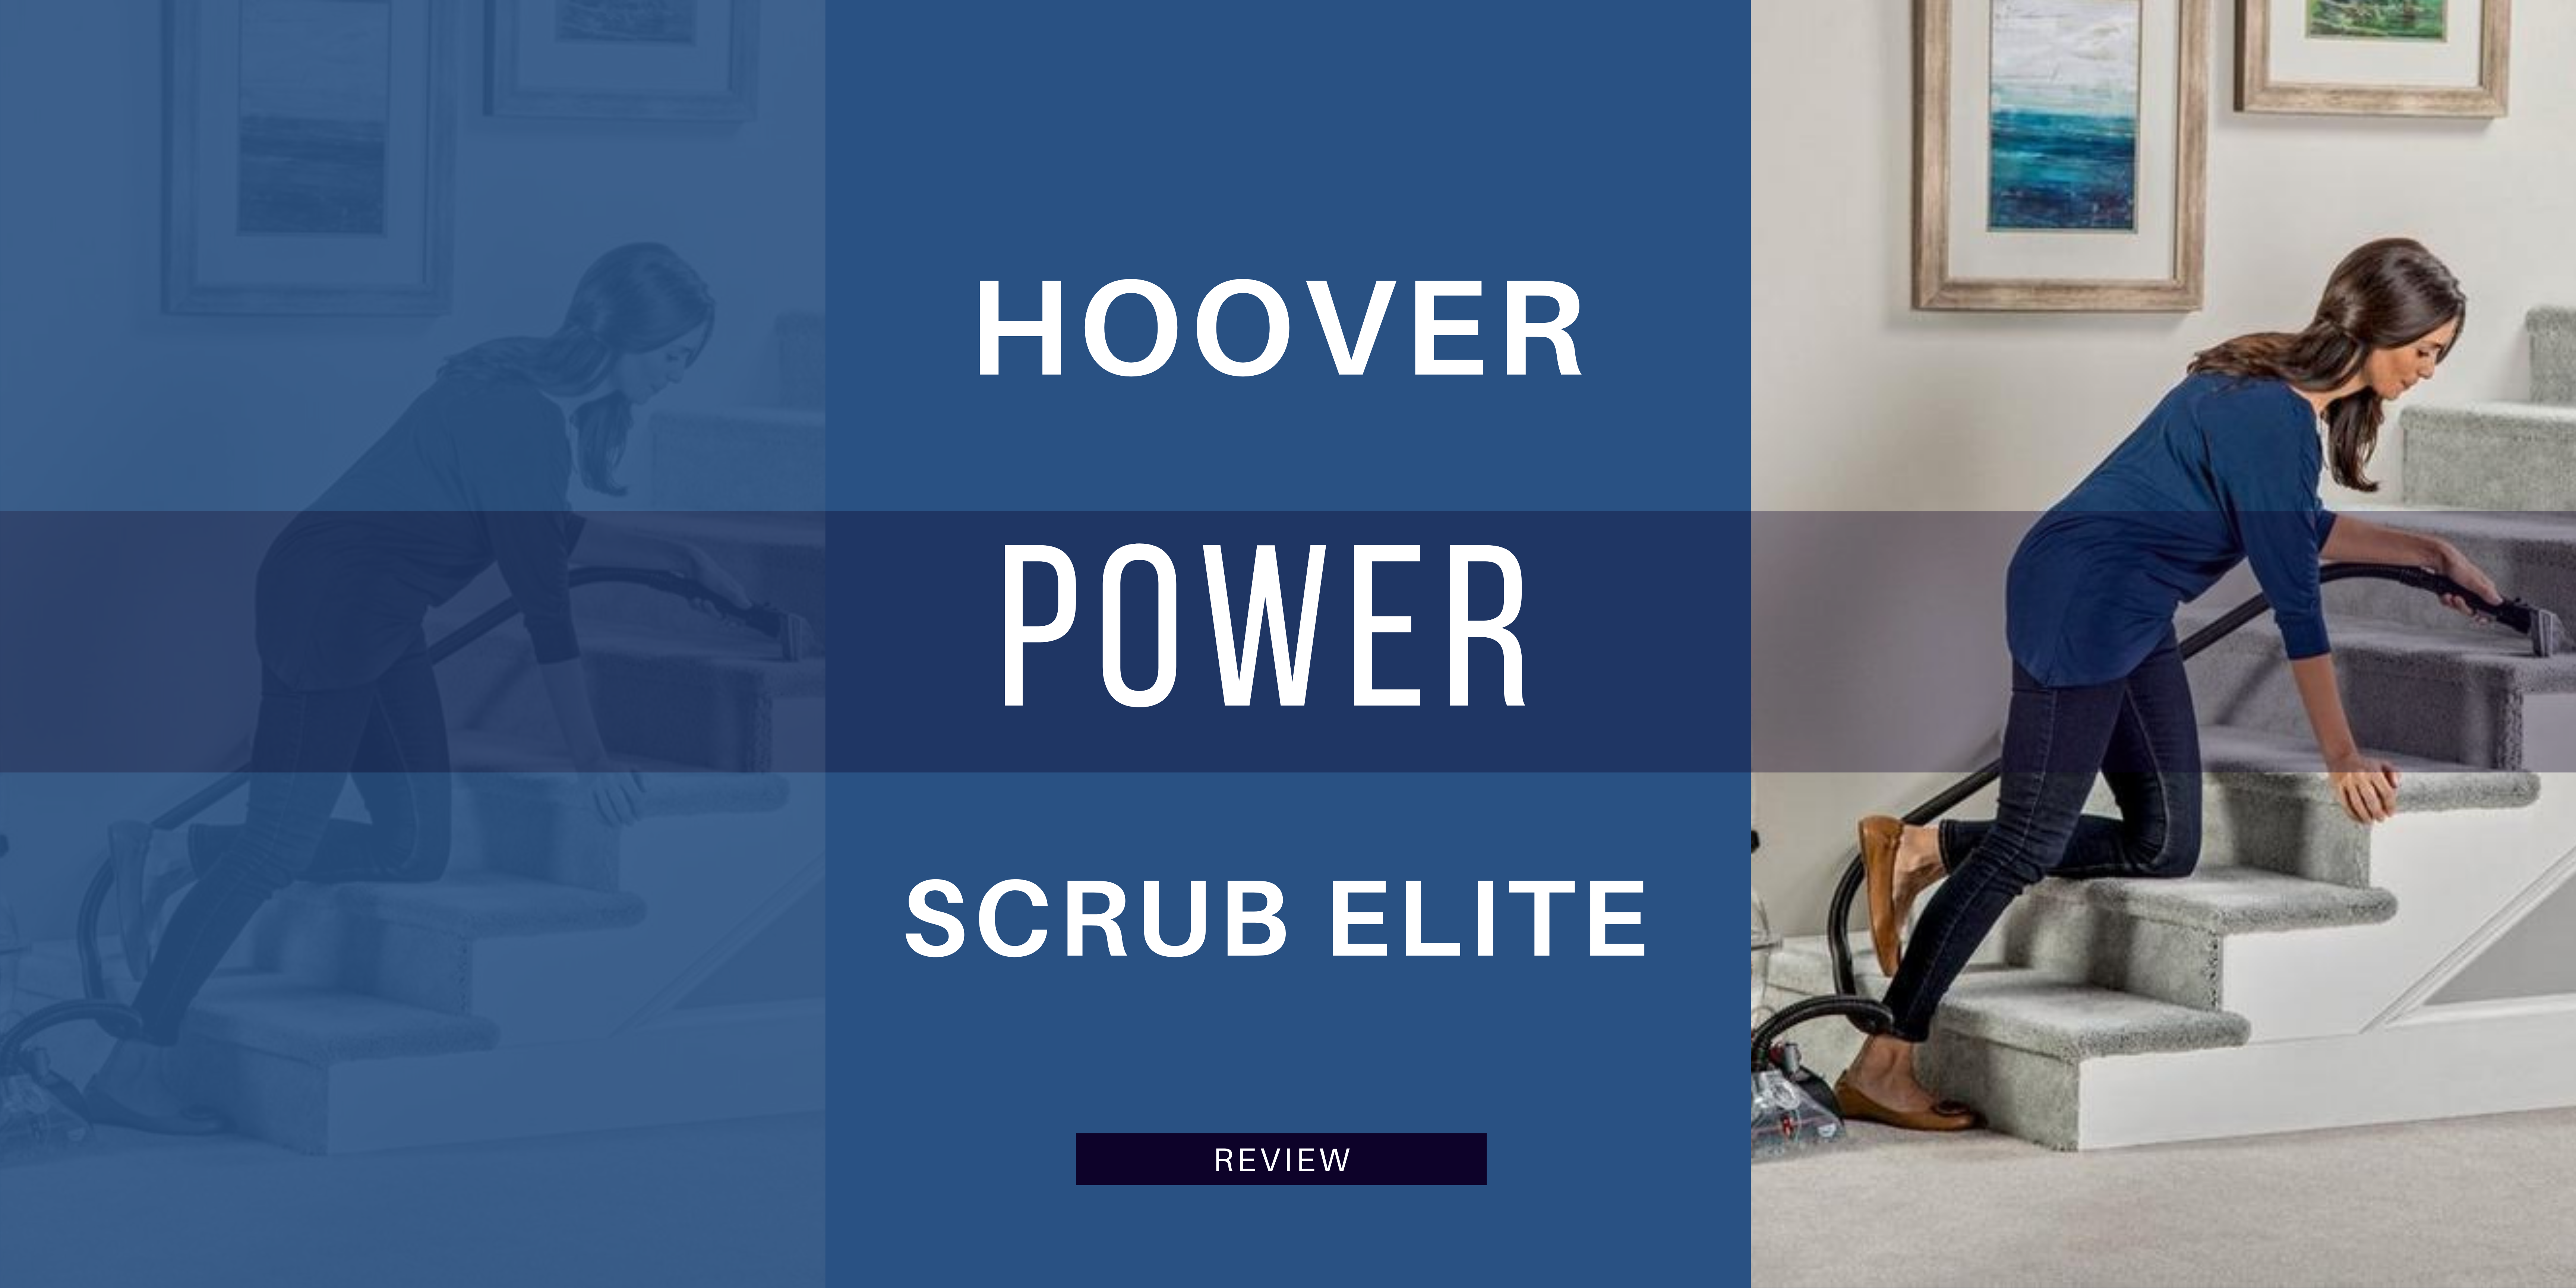 Hoover Power Scrub Elite Review